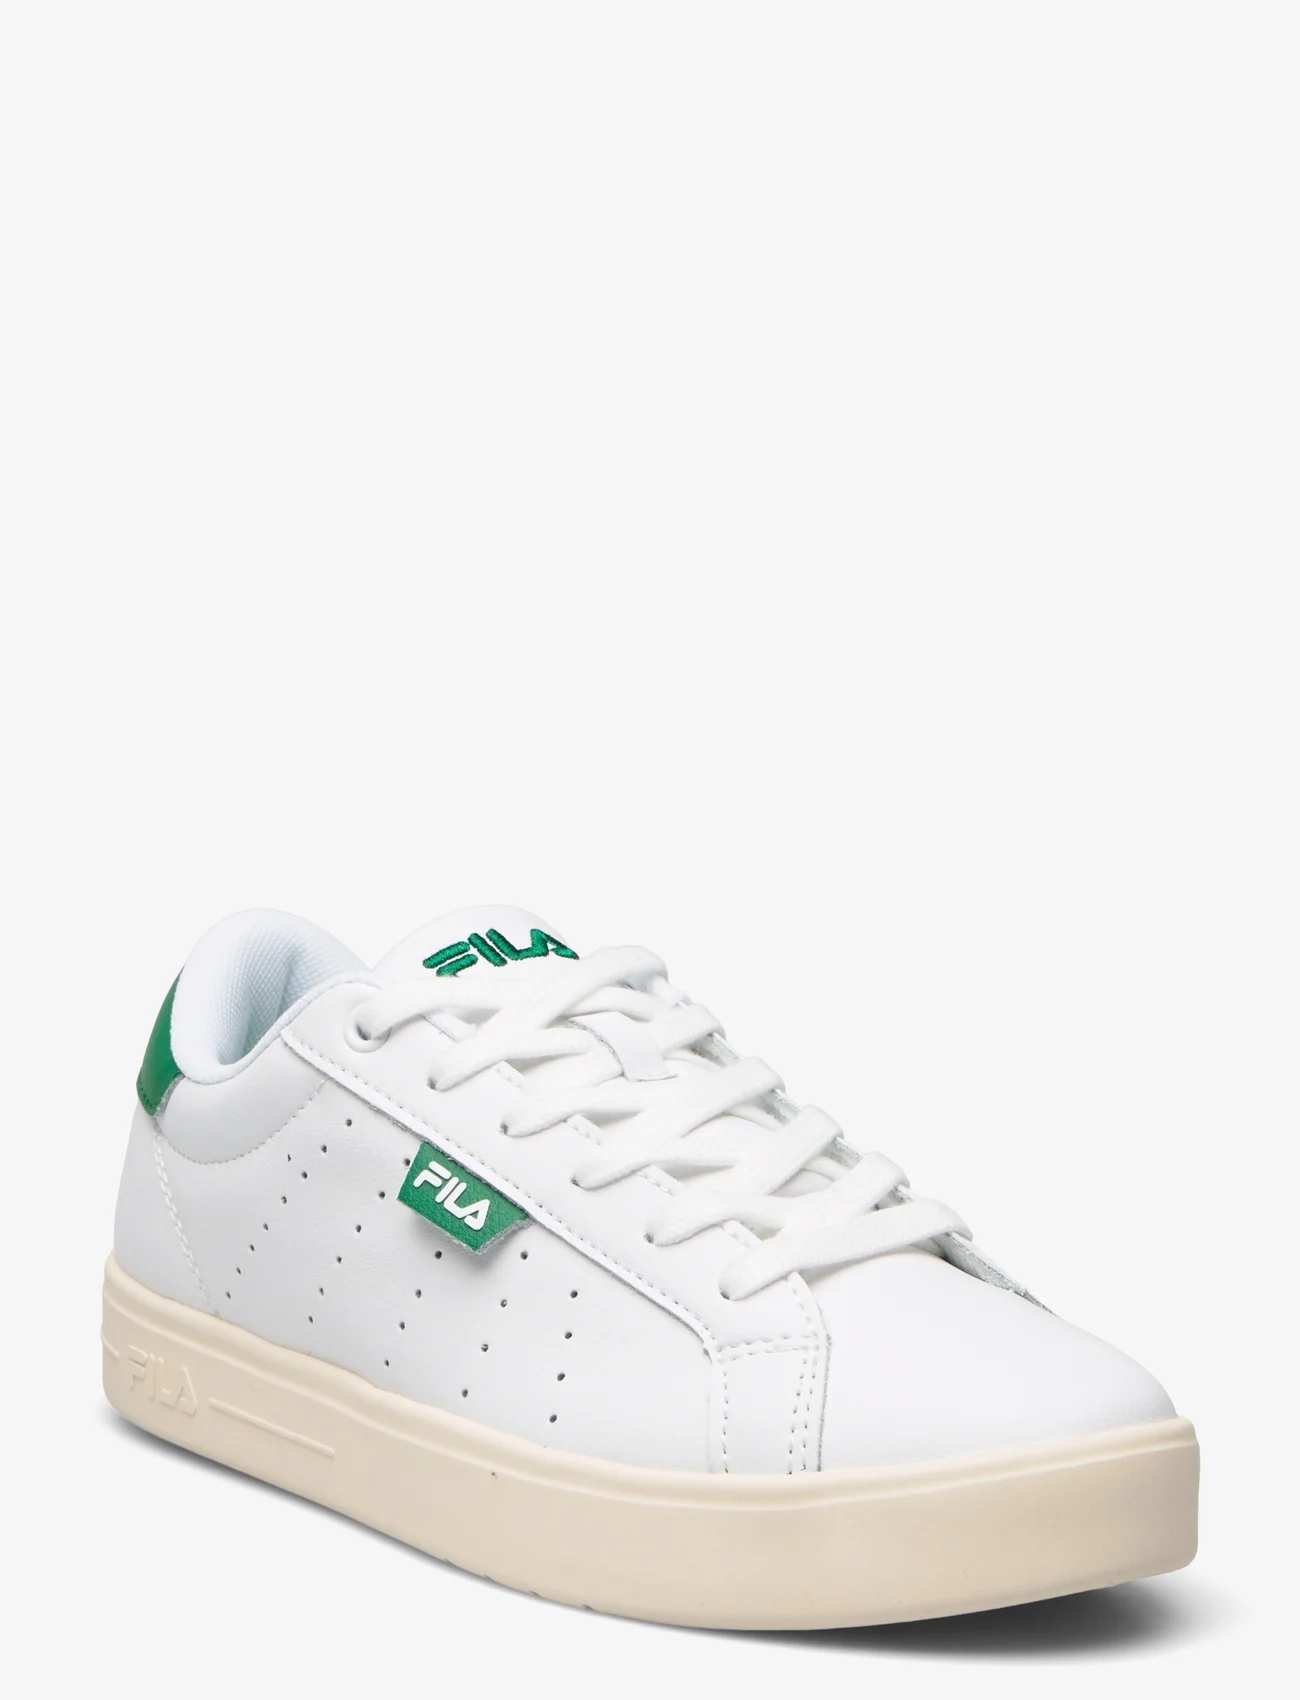 FILA - FILA LUSSO CB wmn - låga sneakers - white-verdant green - 0